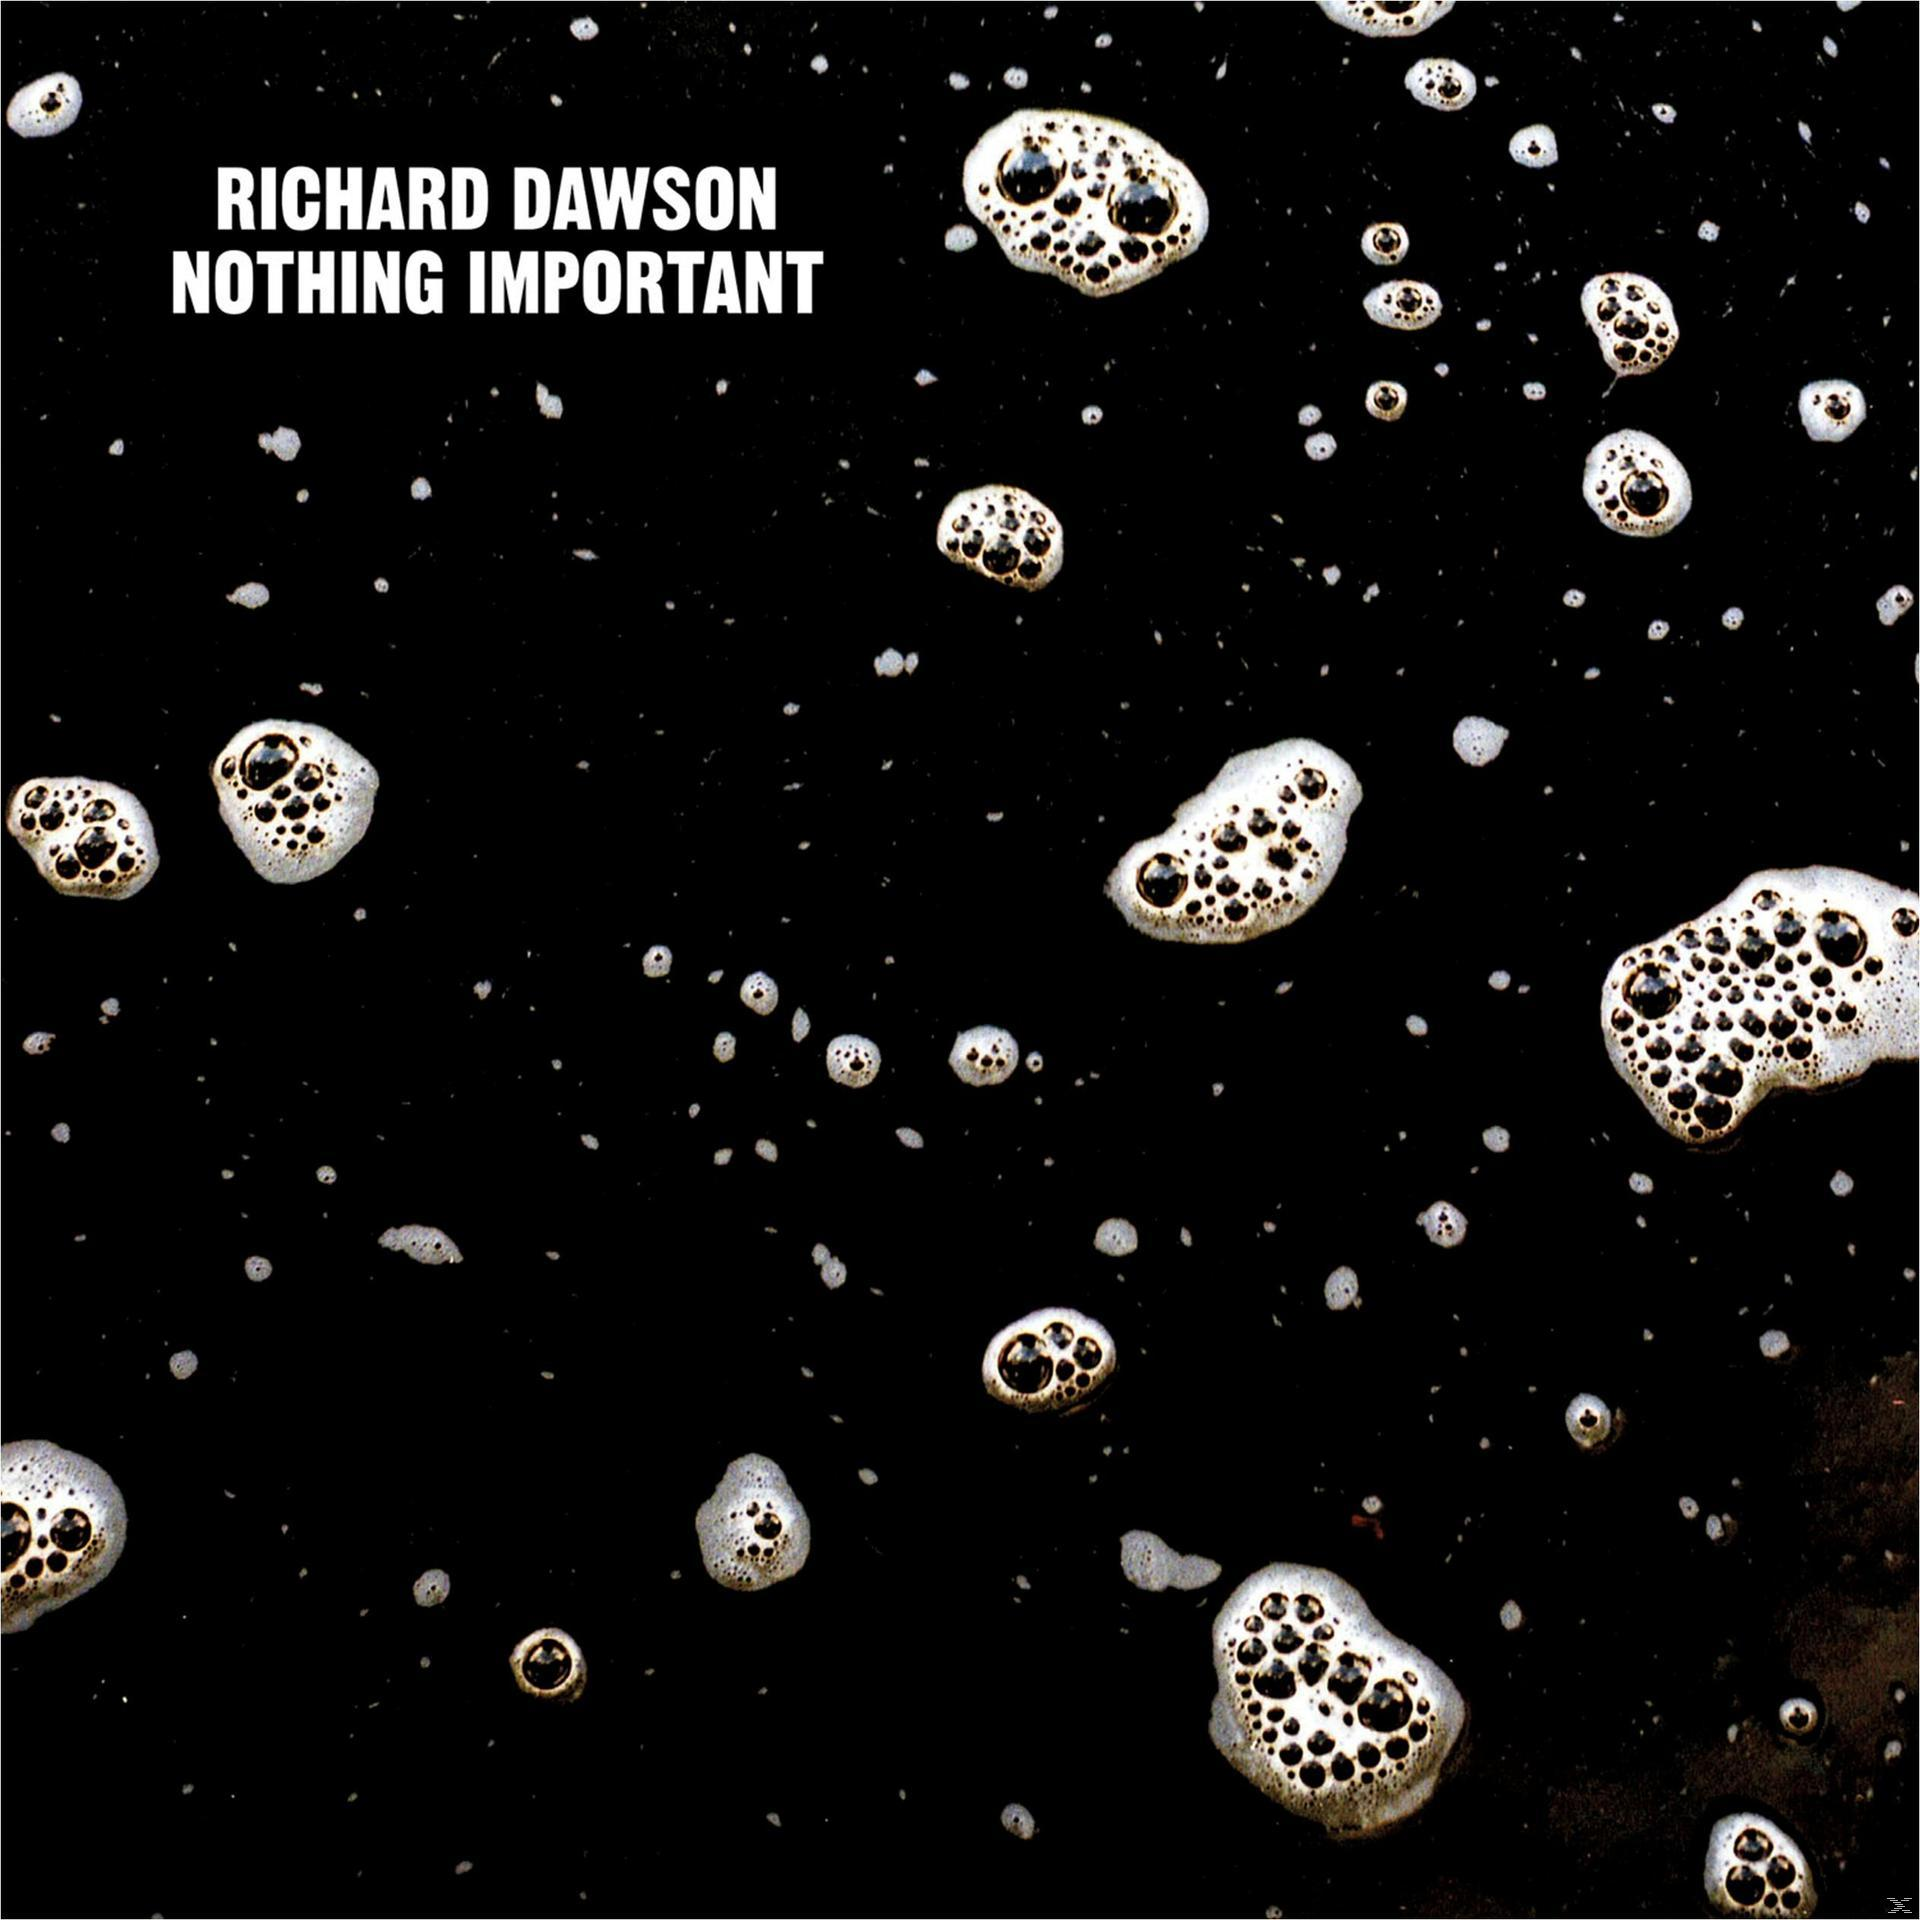 Nothing - Important + Dawson - Download) (LP Richard